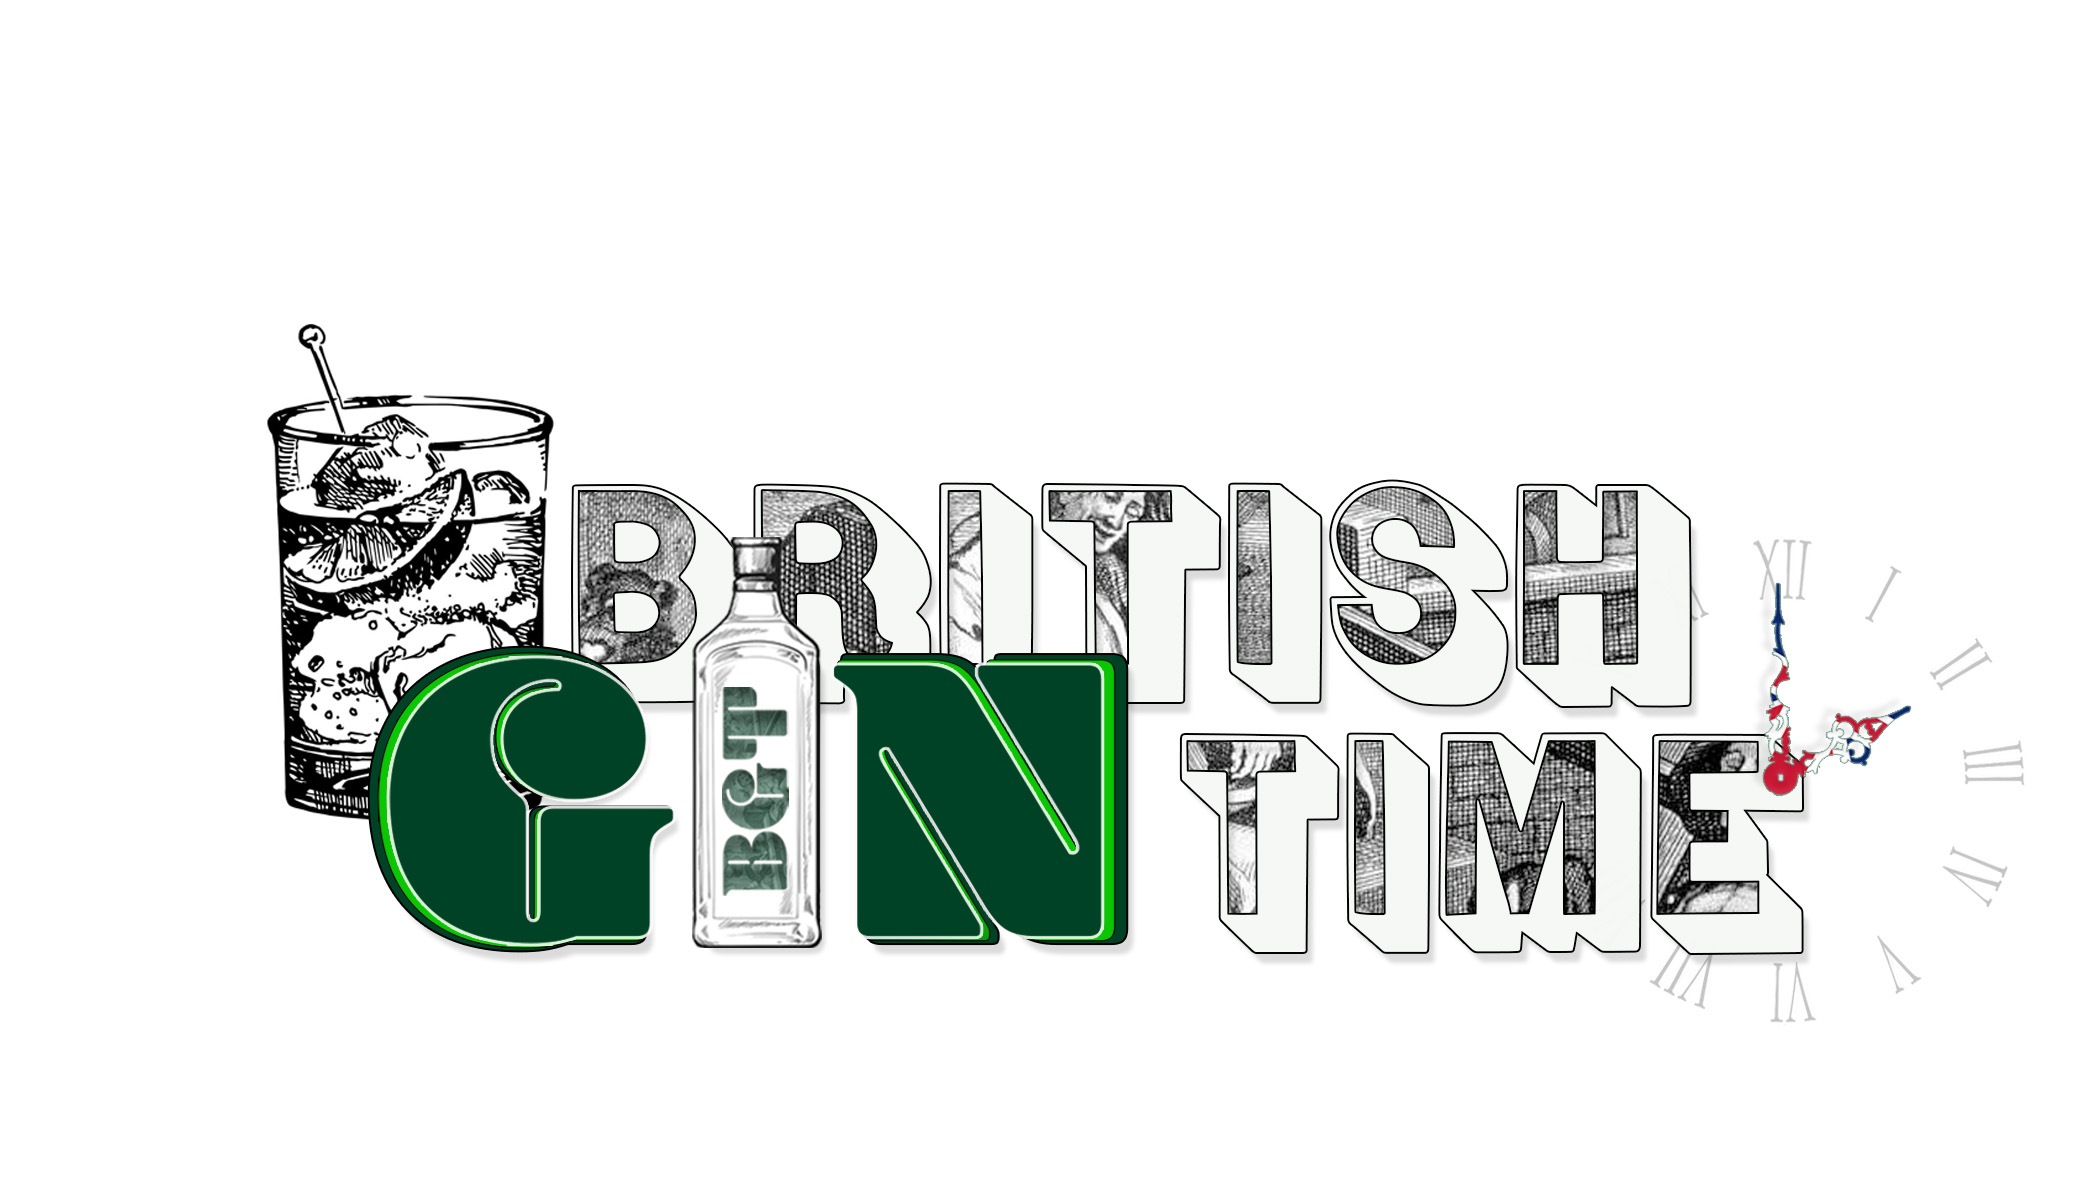 British Gin Time Festival 2020